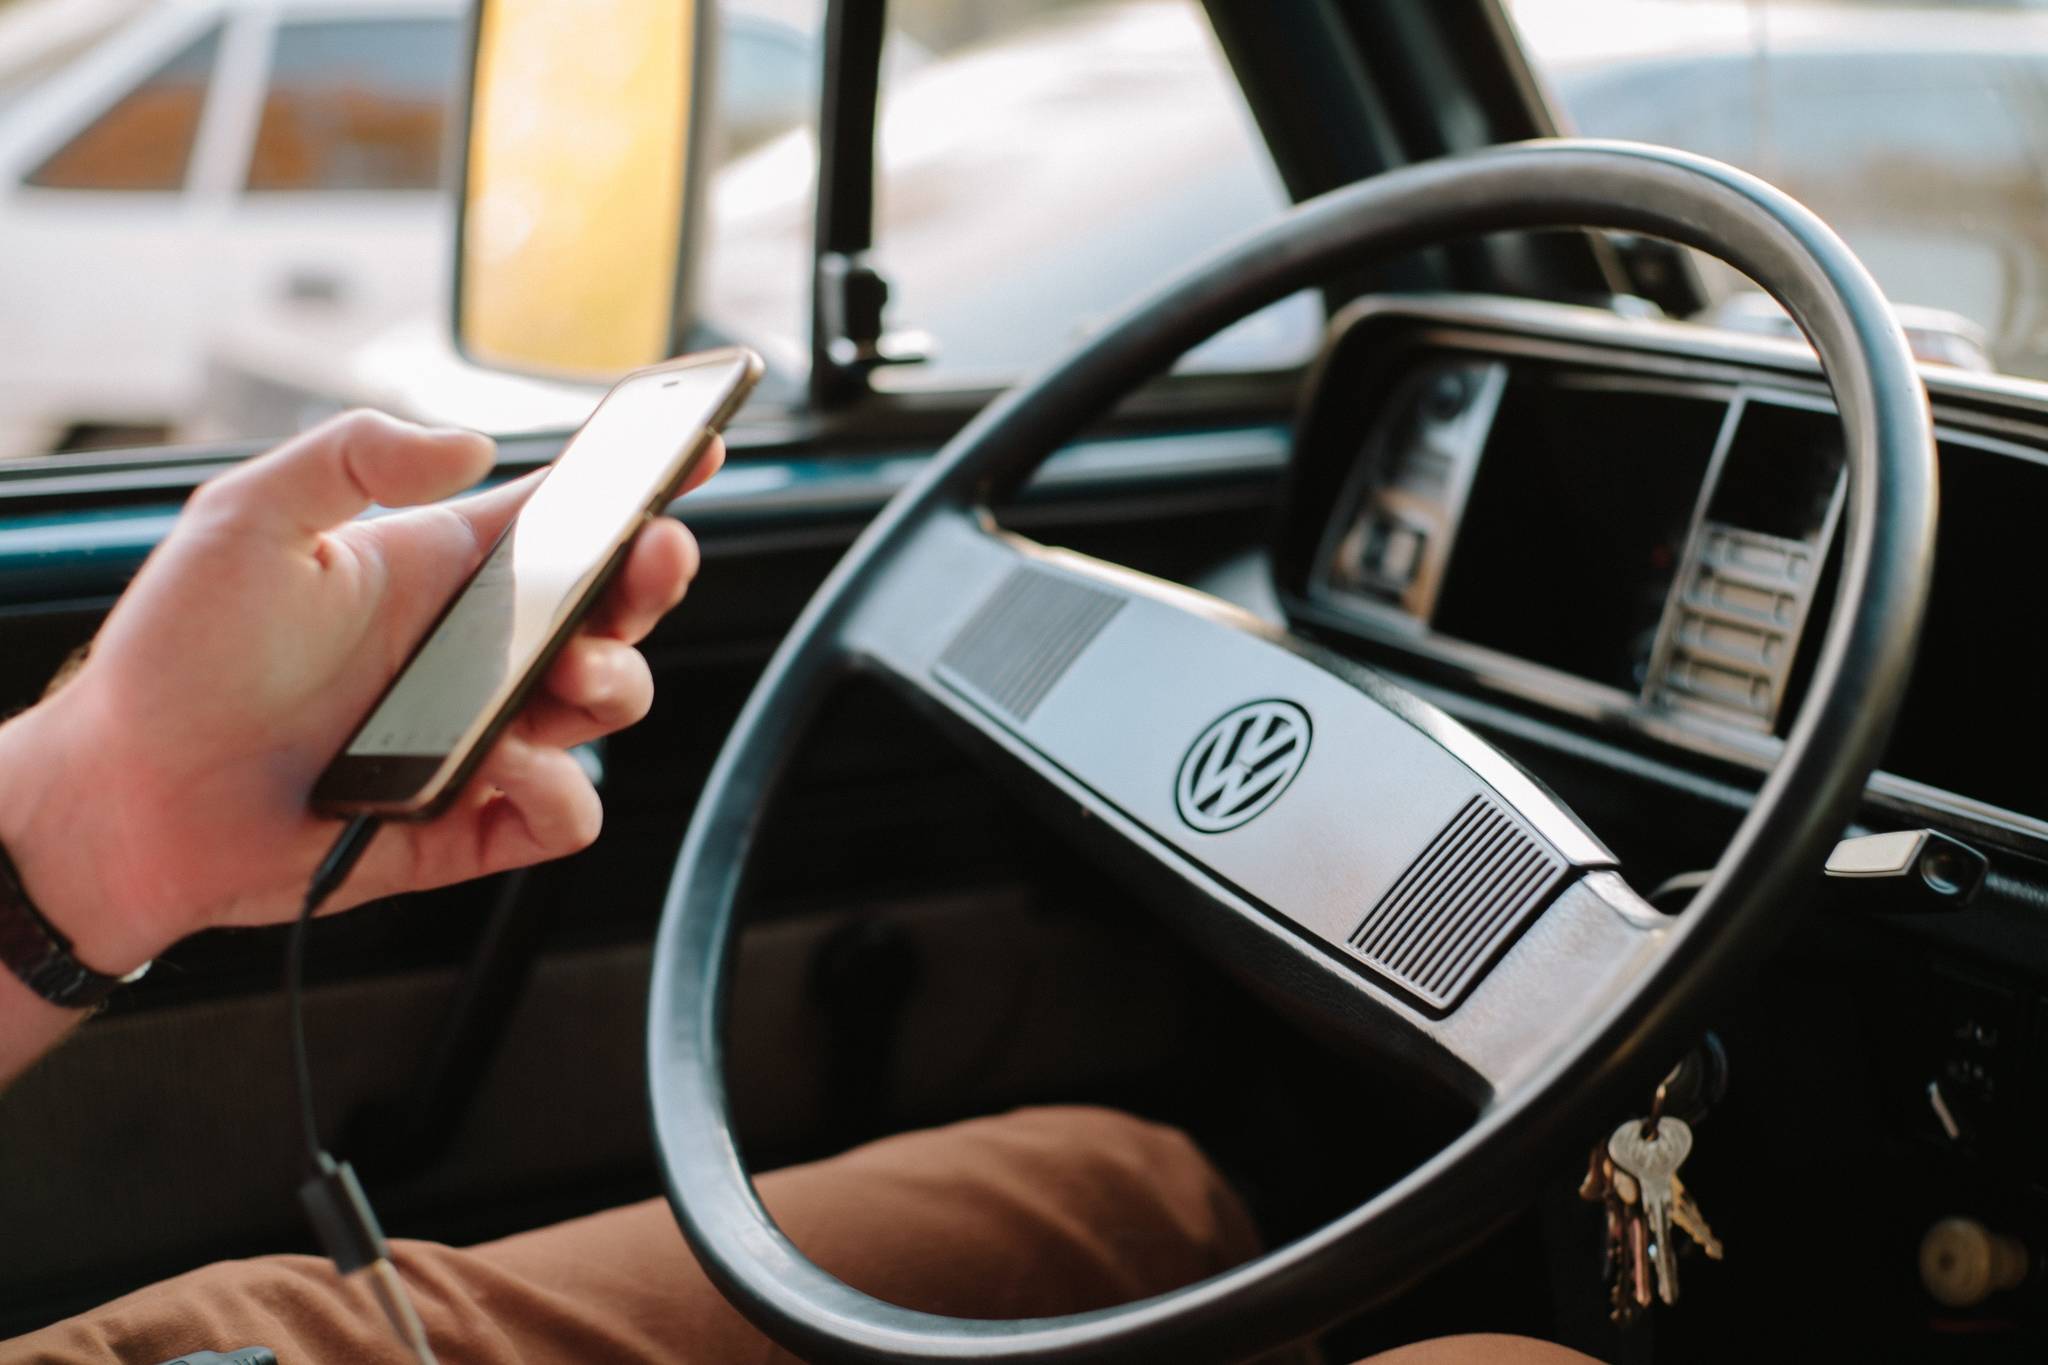 Waze and TIDAL music offer seamless navigation